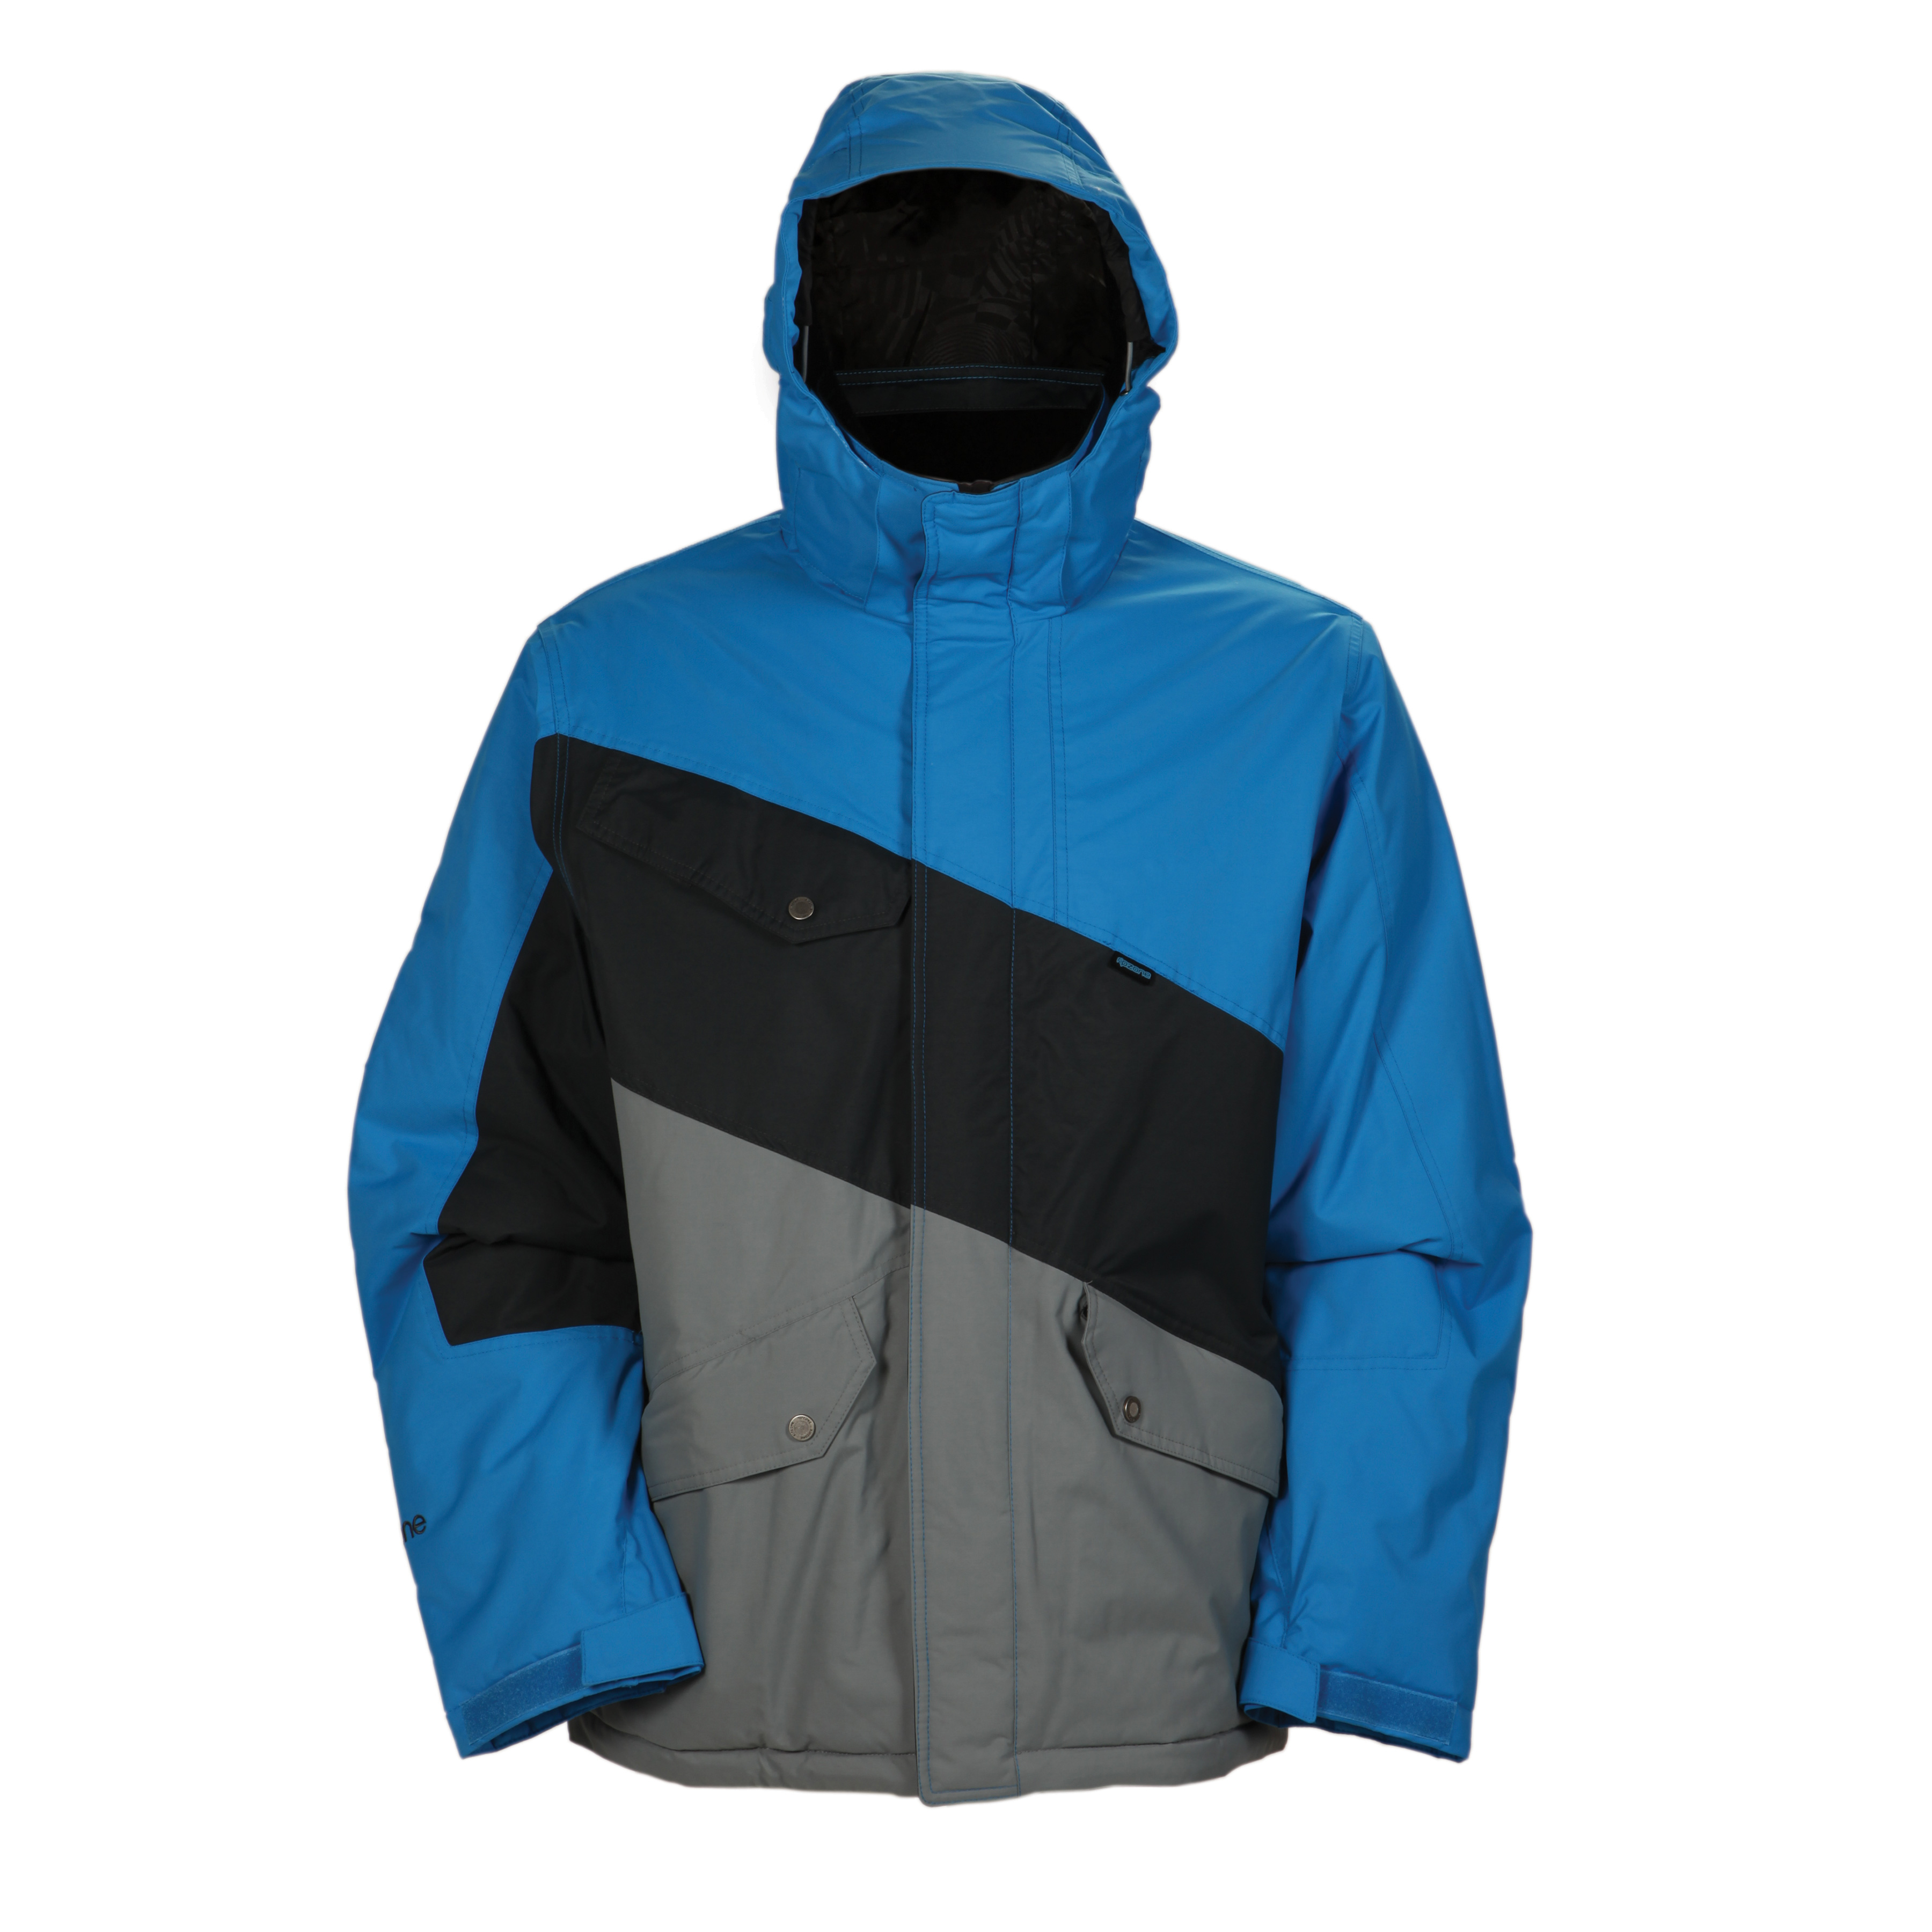 Ripzone Bender Snowboard Jacket 2013 | Mount Everest